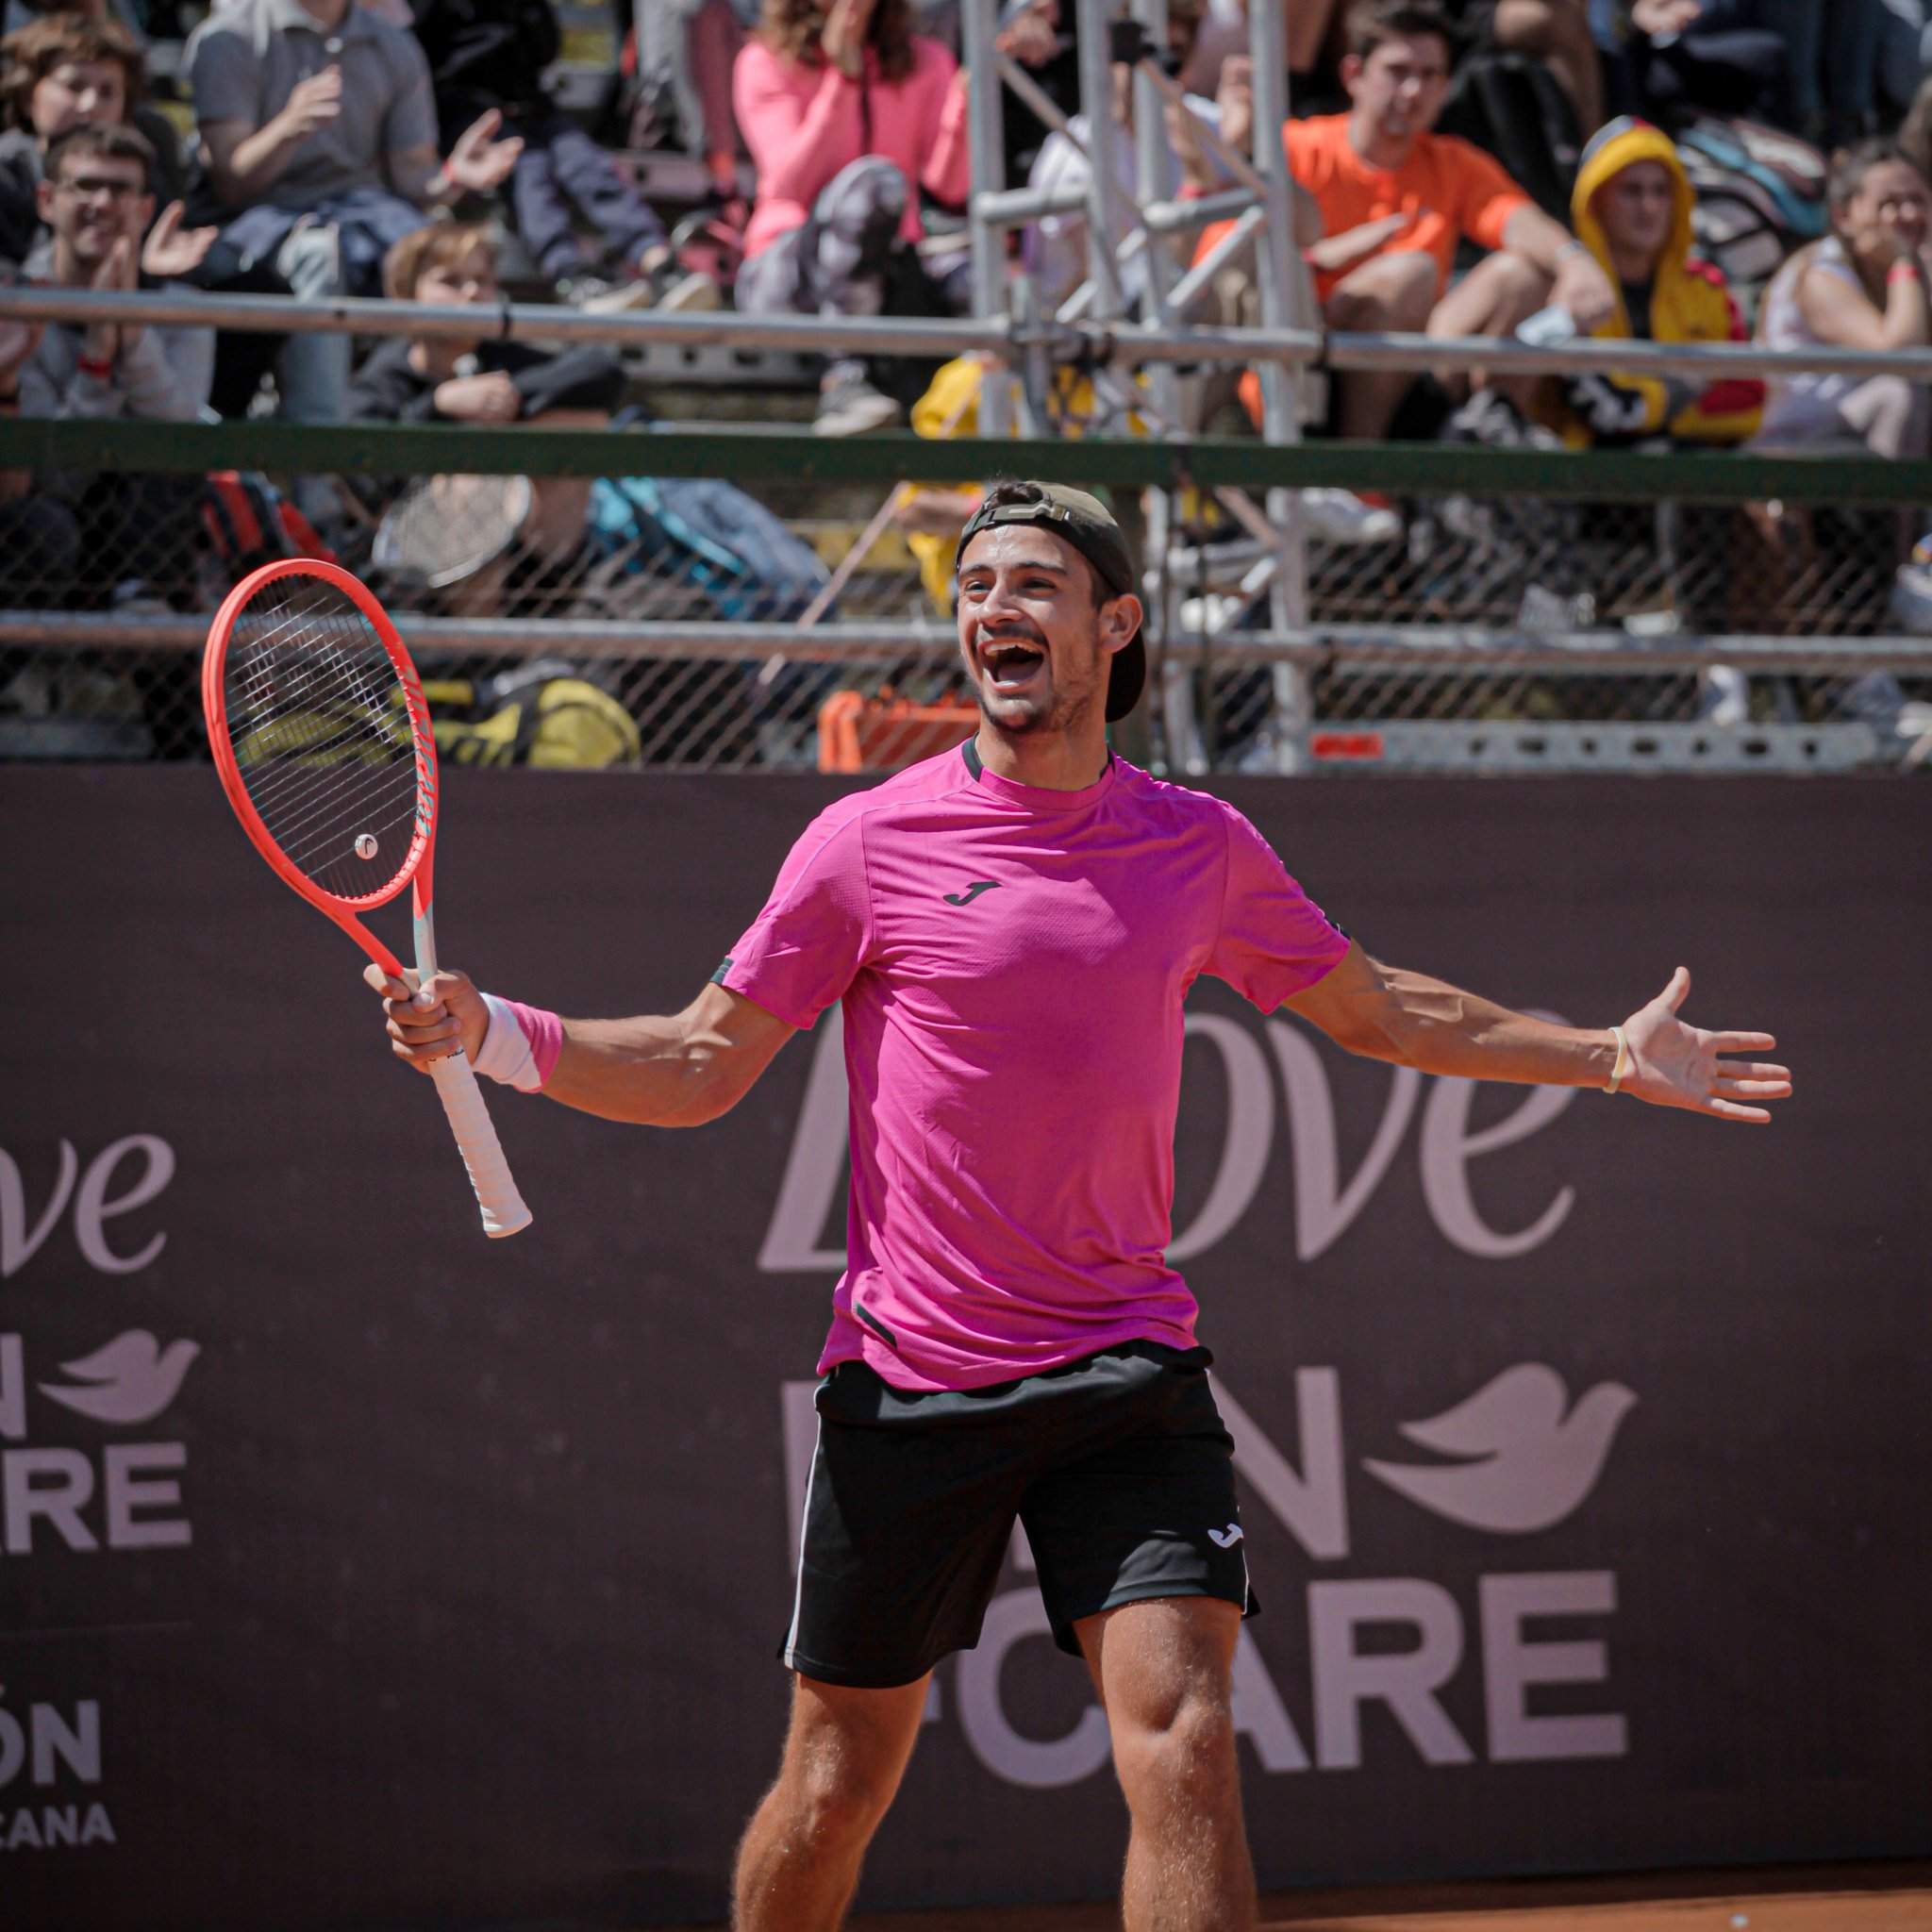 Tenis: Mariano Navone competira en el ATP 250 Córdoba Open